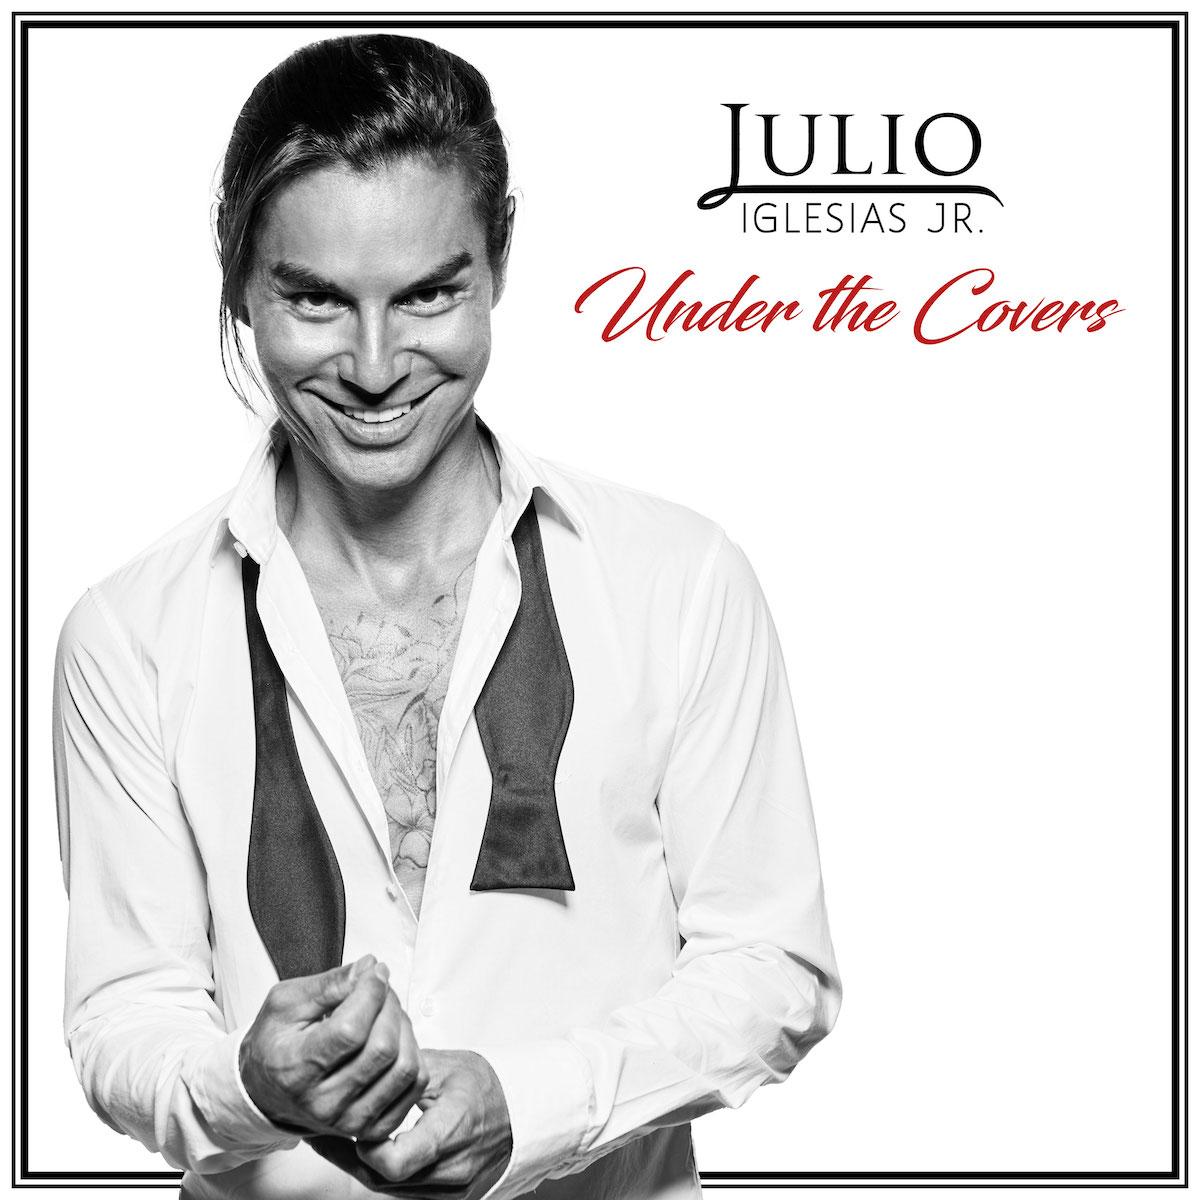 Under The Covers Album Art Credit - Jesus Cordero